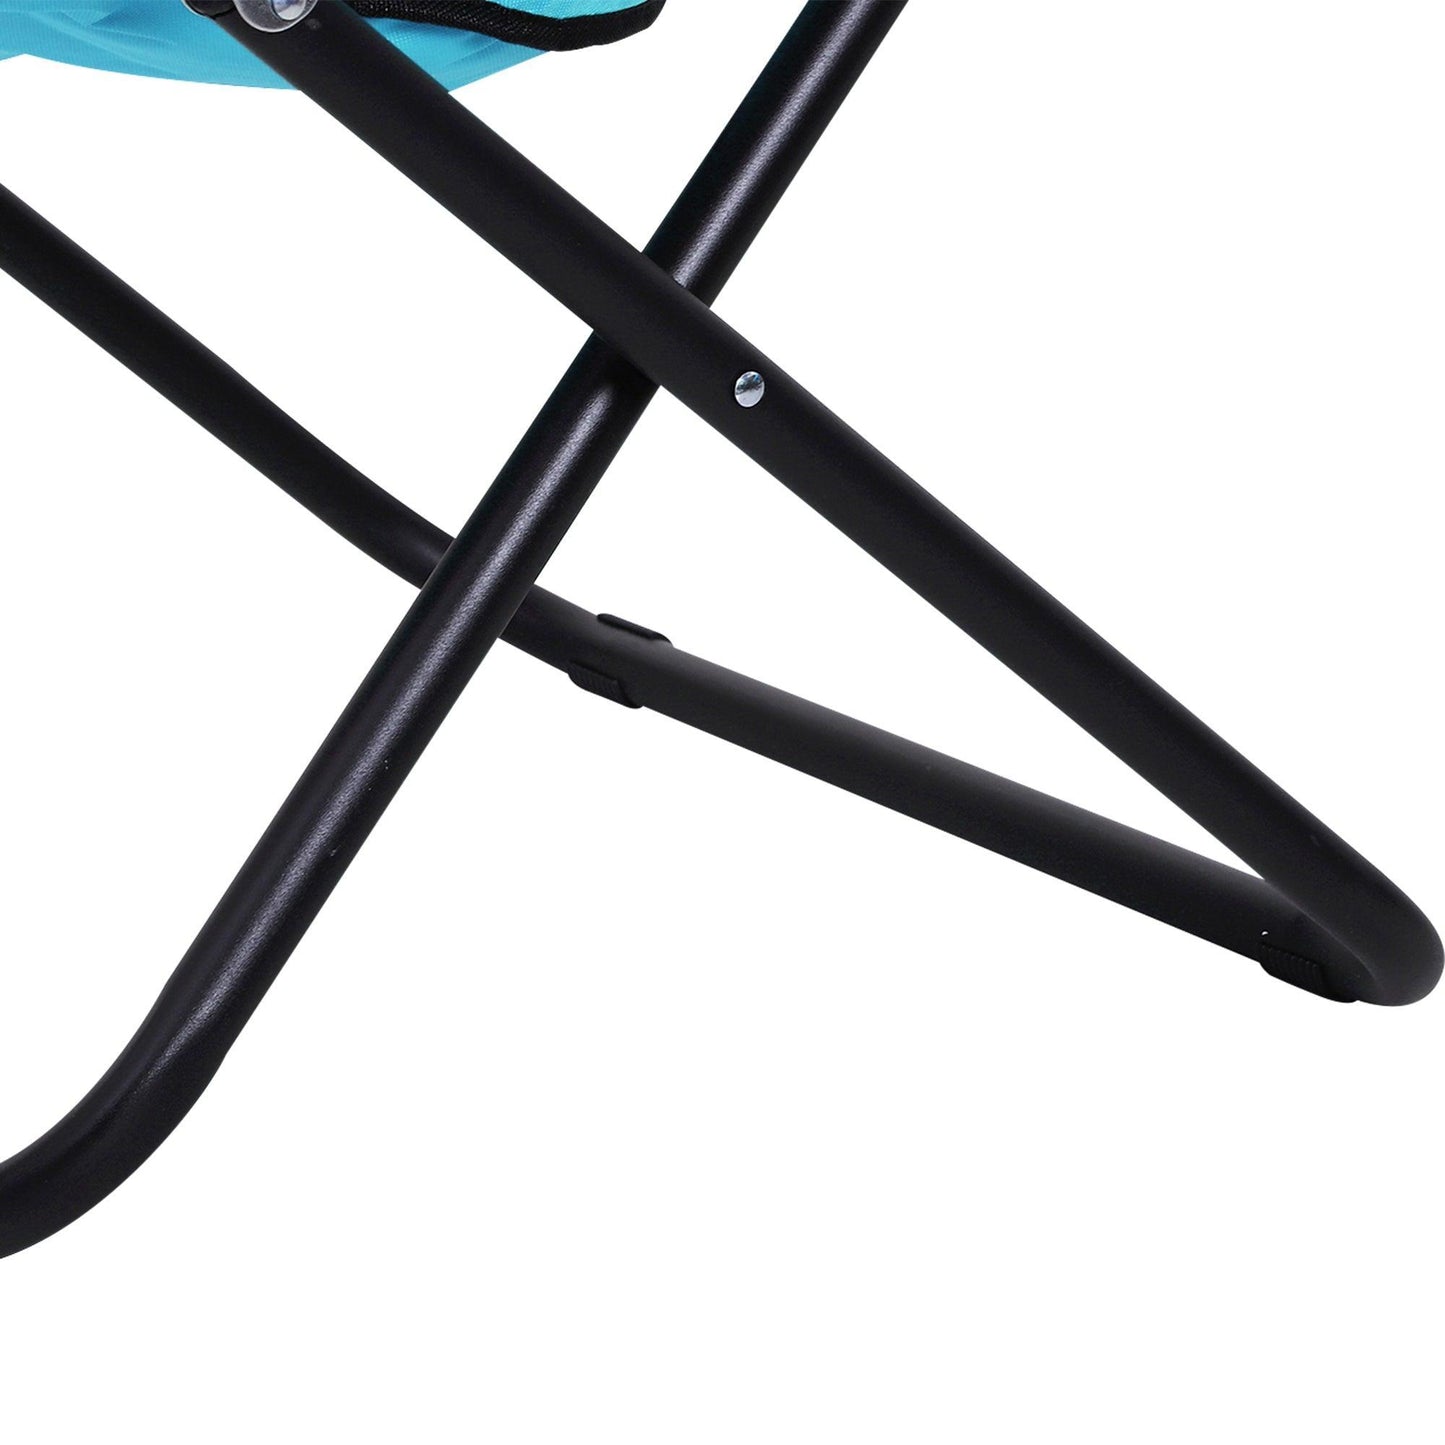 Outsunny Portable Outdoor Folding Saucer Moon Chair - Blue - ALL4U RETAILER LTD